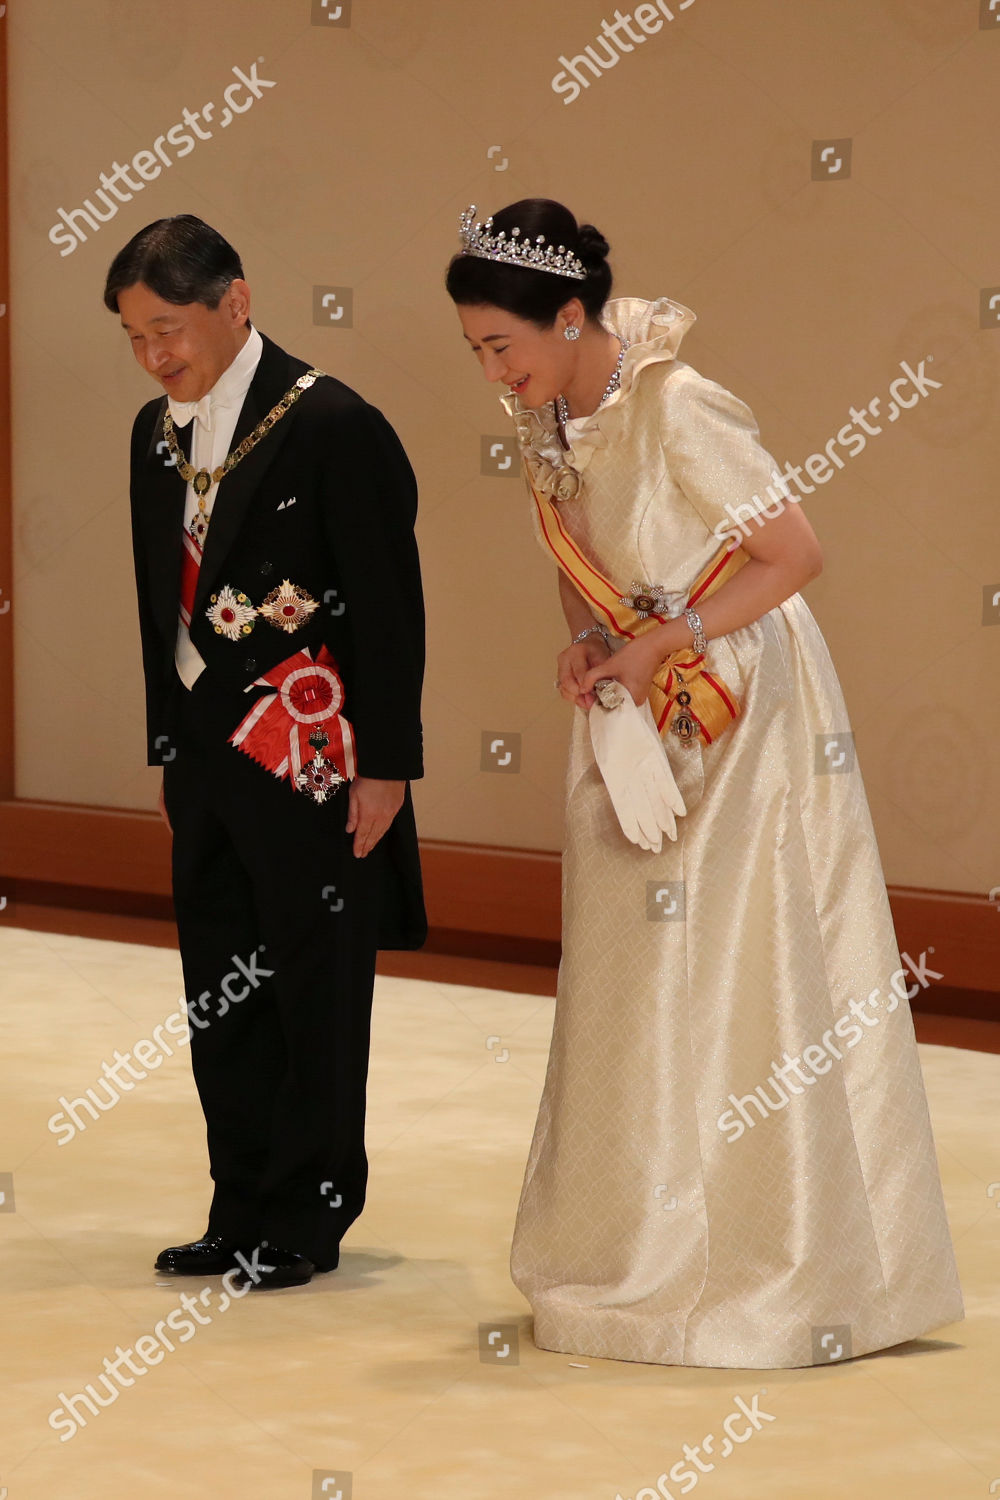 imperial-state-banquet-tokyo-japan-shutterstock-editorial-10452887bo.jpg